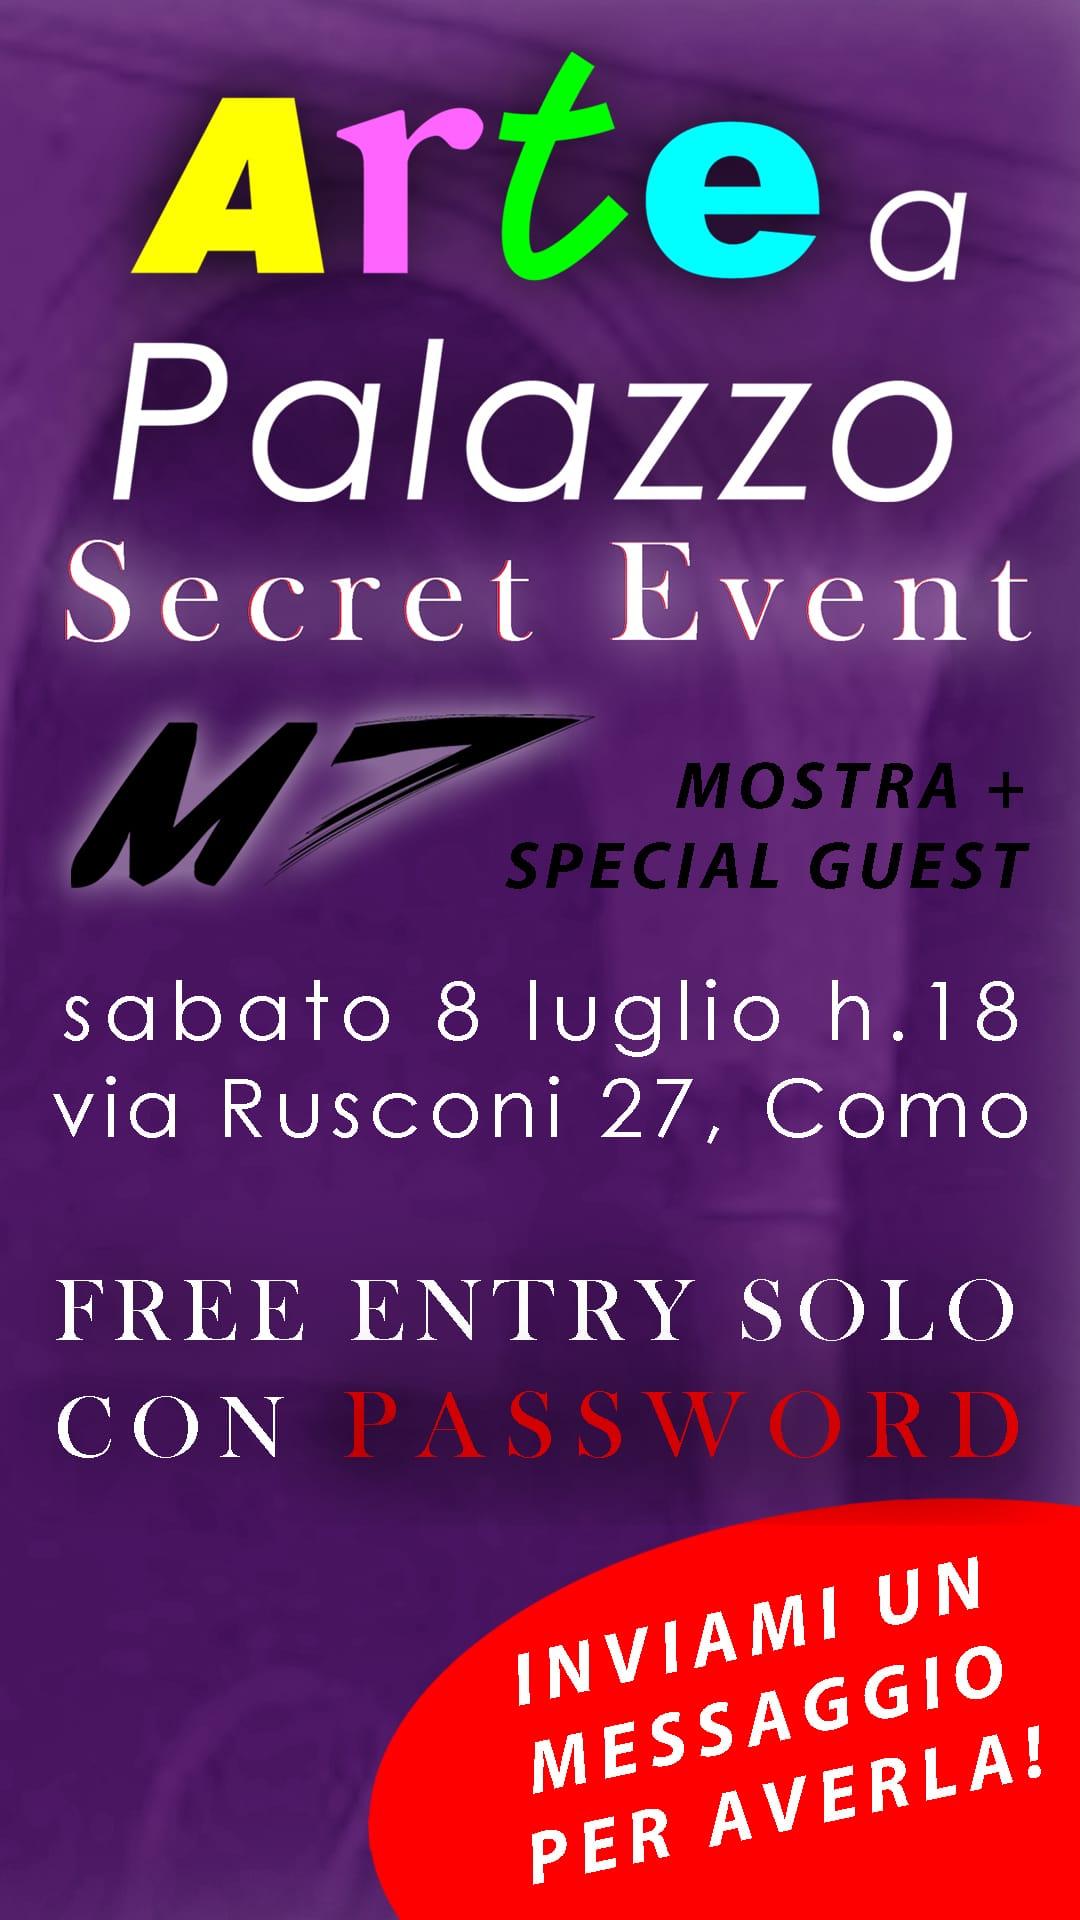 Arte a palazzo - secret event